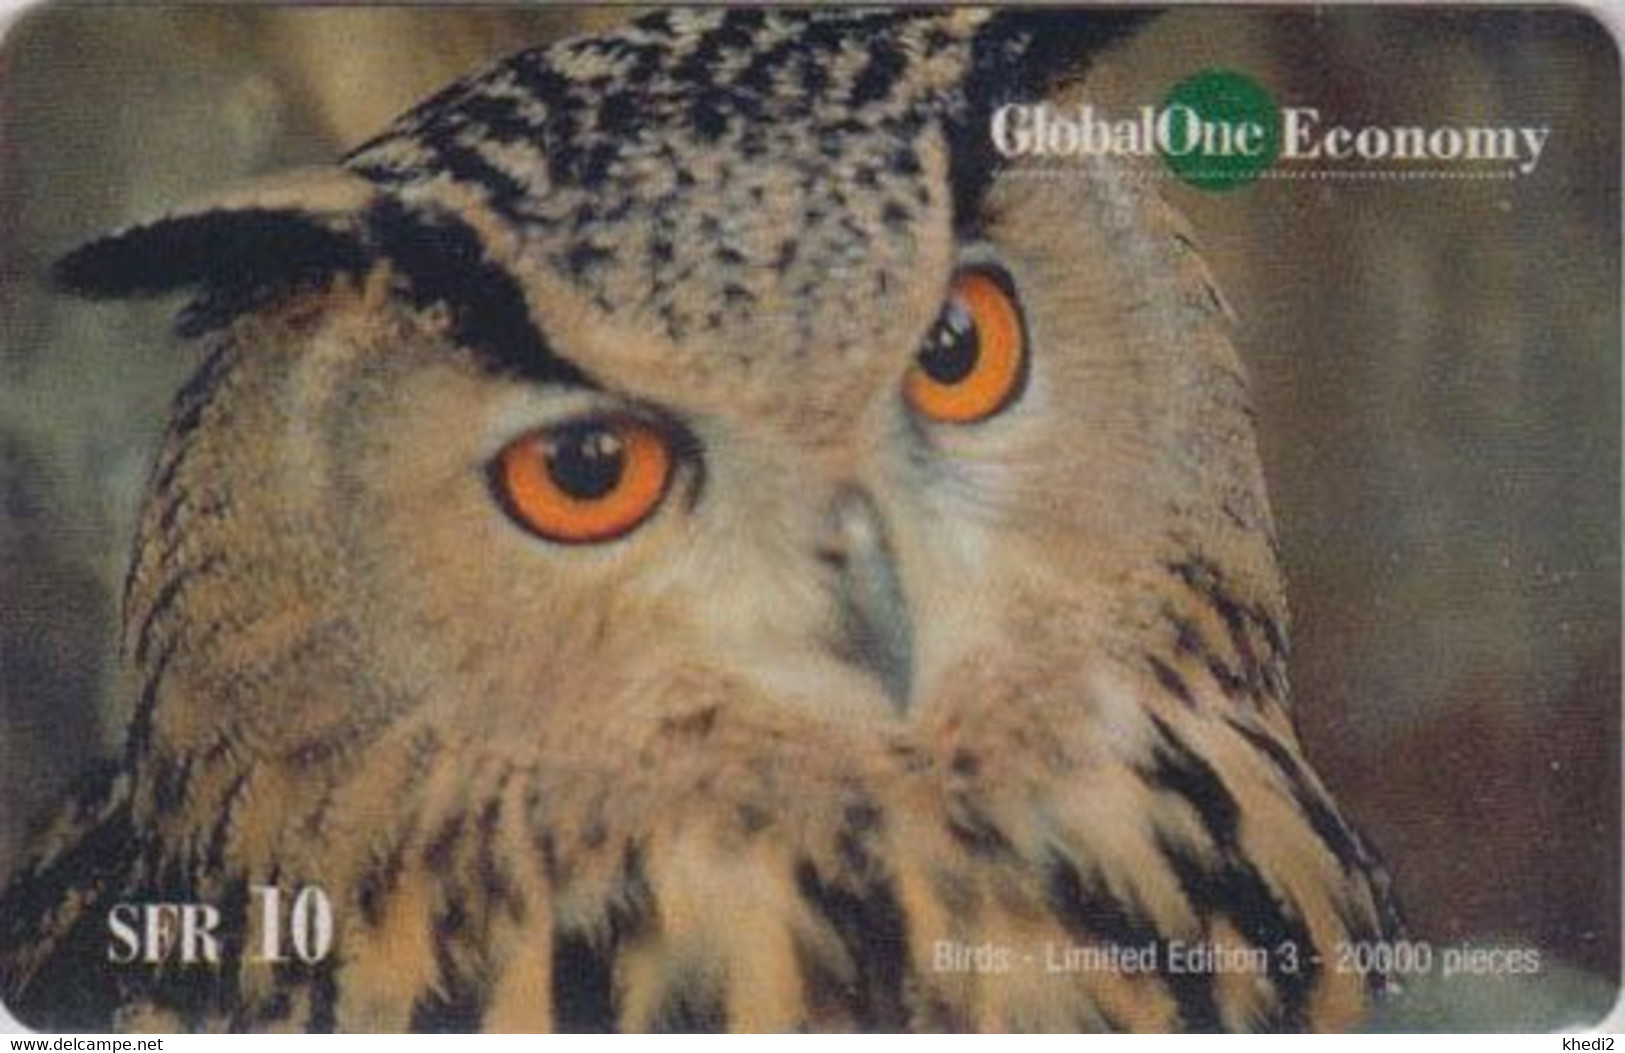 Télécarte Prépayée SUISSE GLOBAL ONE - ANIMAL - OISEAU - HIBOU - OWL BIRD - Switzerland Prepaid Phonecard - 5149 - Búhos, Lechuza